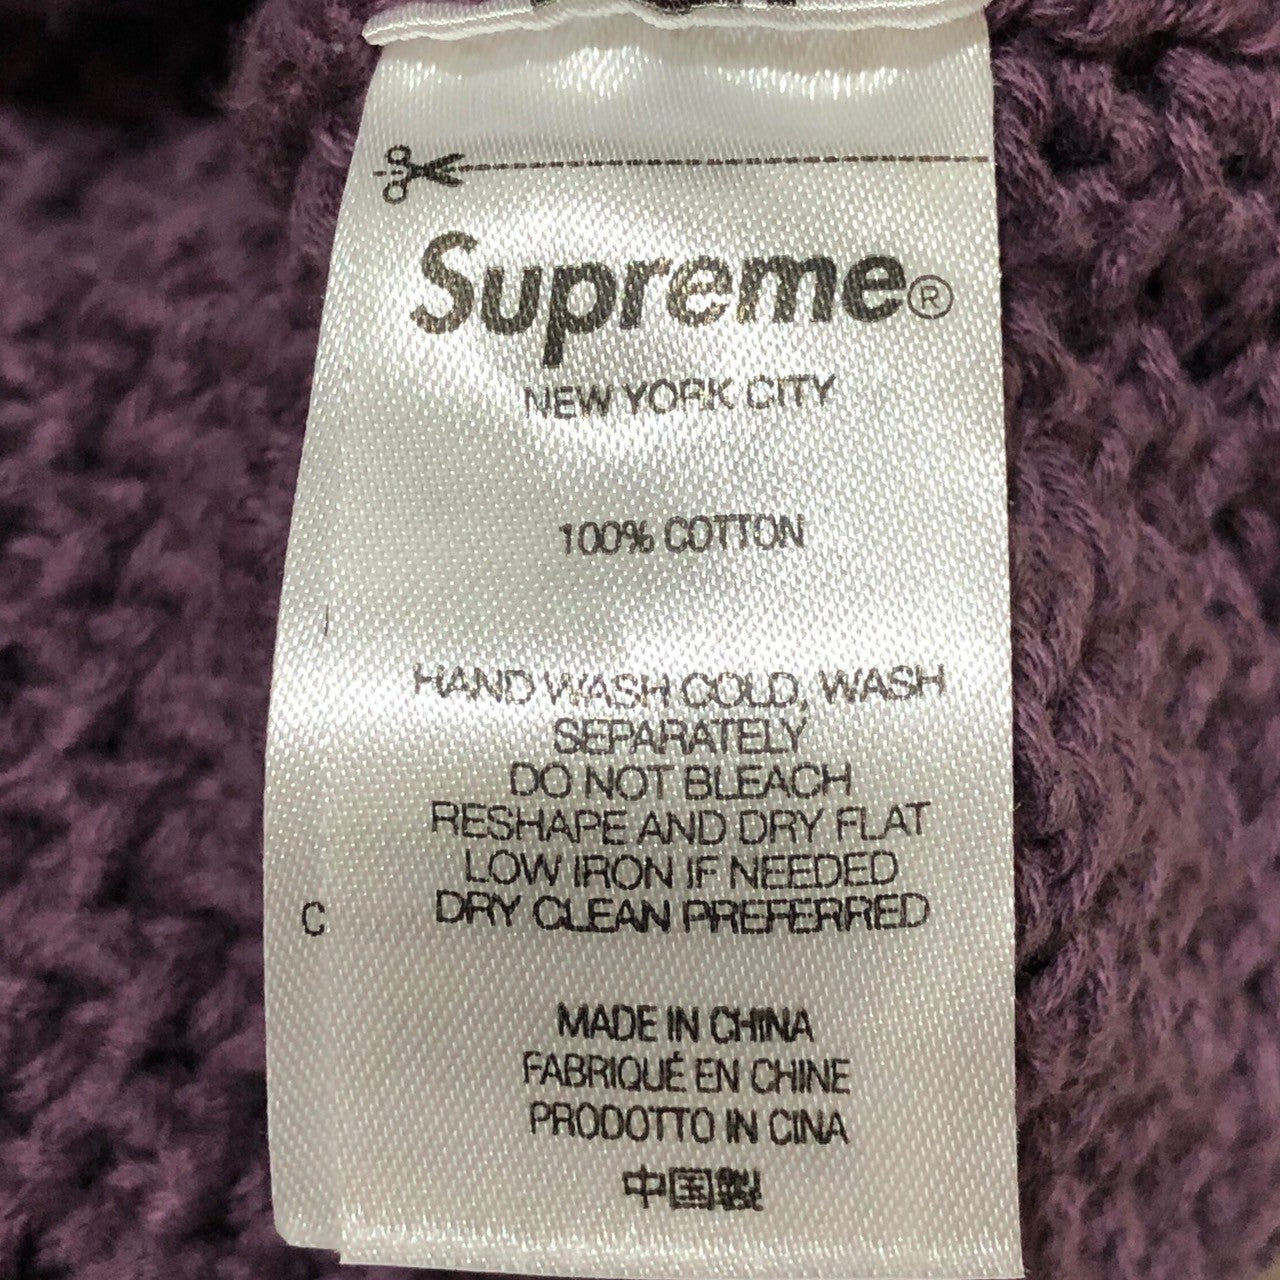 SUPREME(シュプリーム) 22SS Open Knit Small Box Sweater ニット 